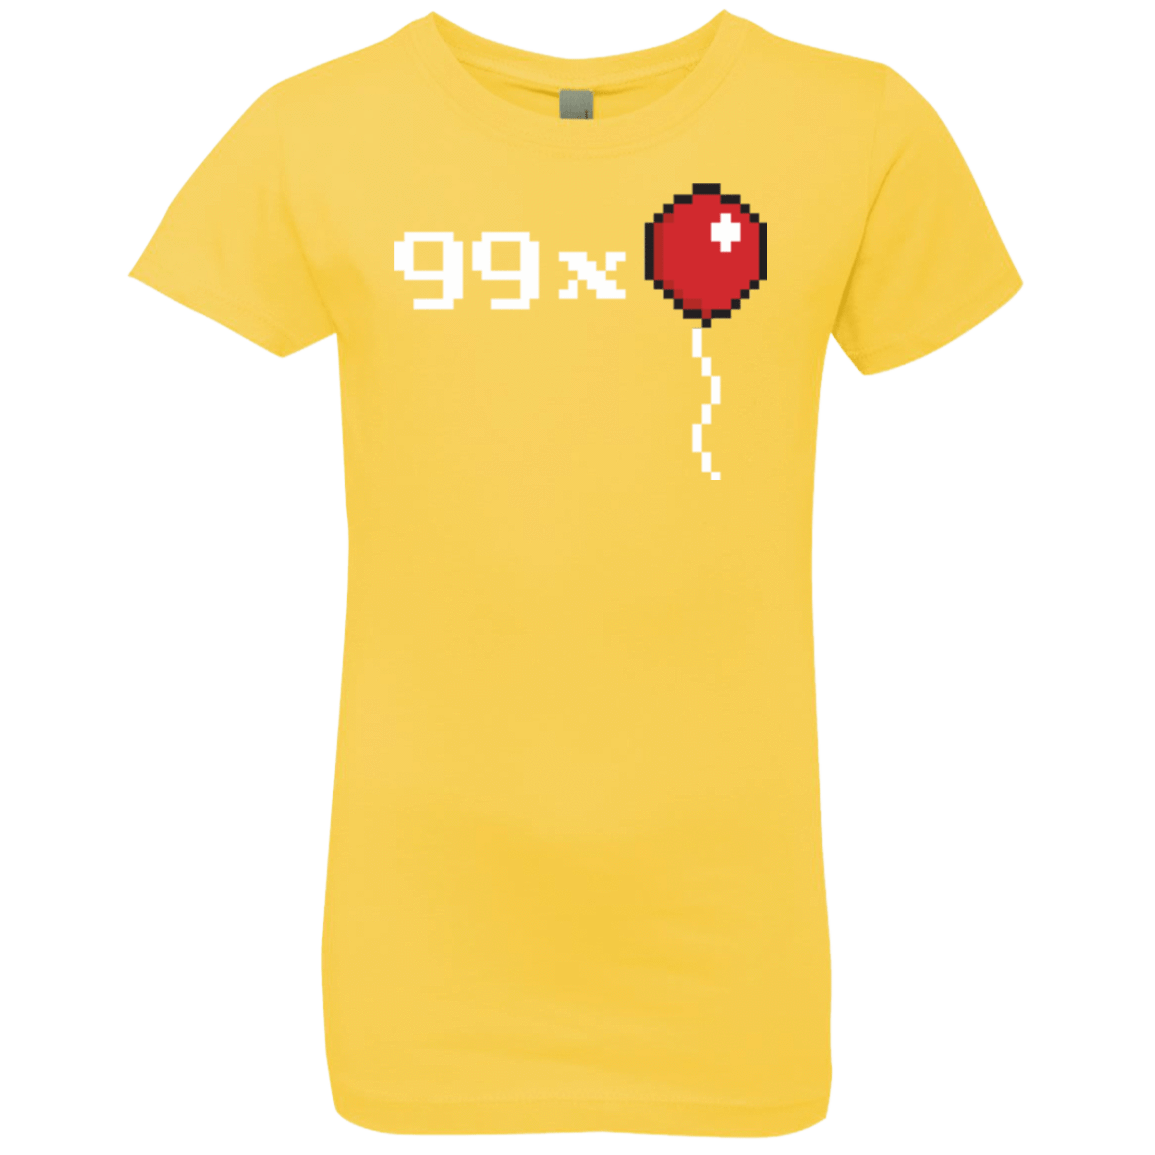 T-Shirts Vibrant Yellow / YXS 99x Balloon Girls Premium T-Shirt